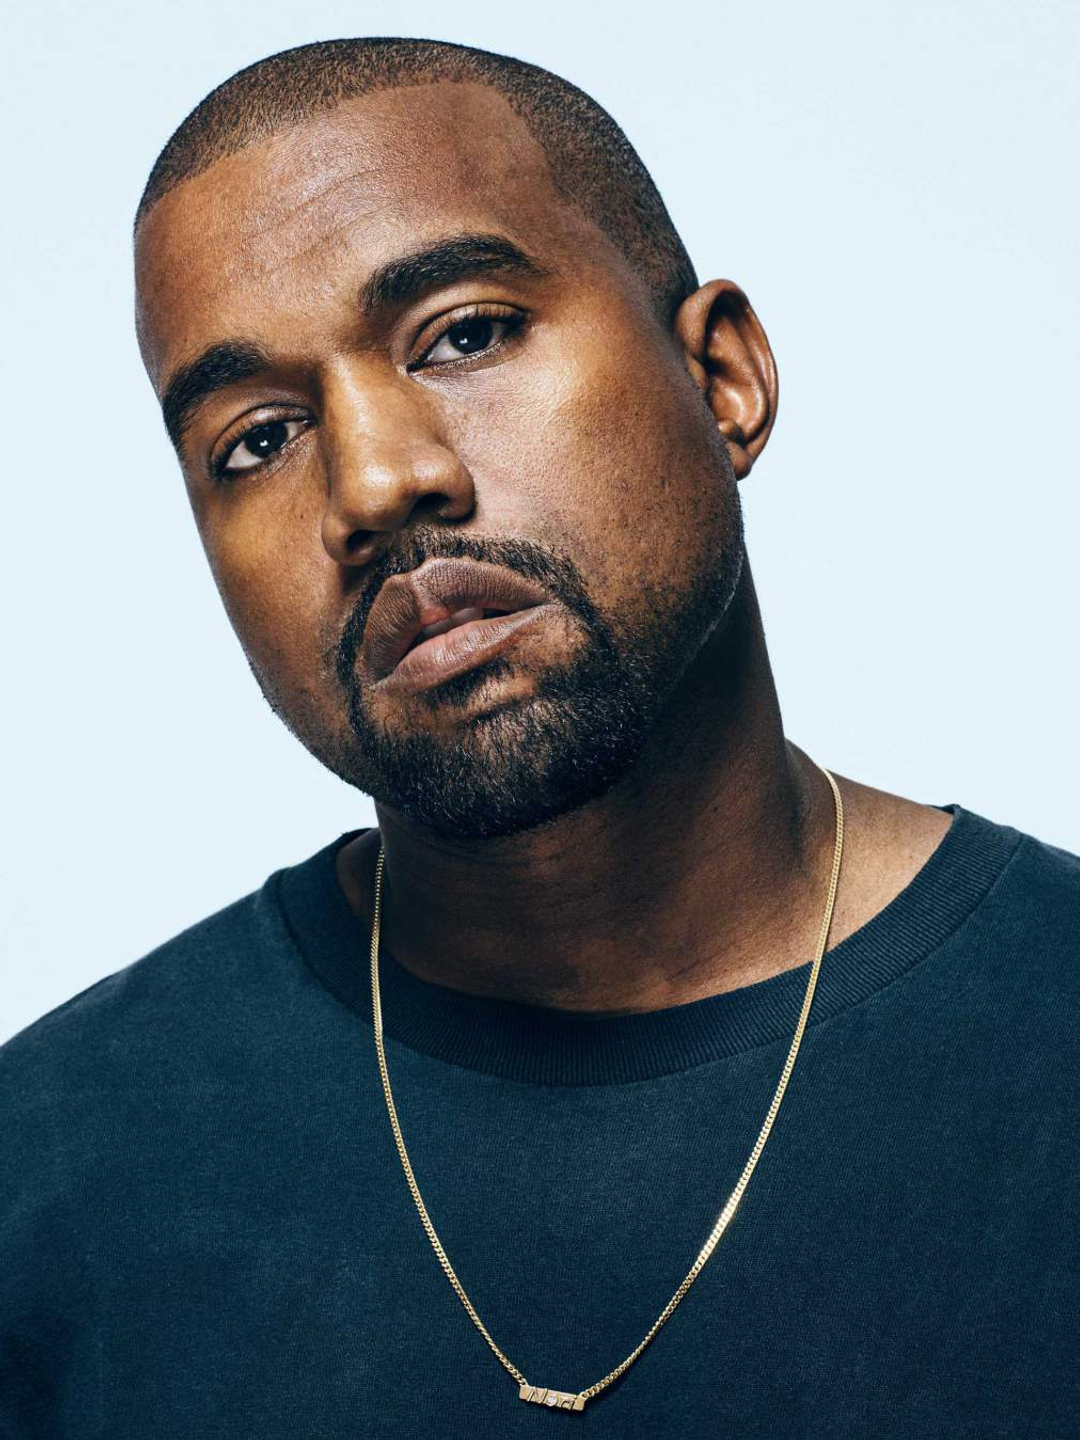 Kanye West his zodiac sign